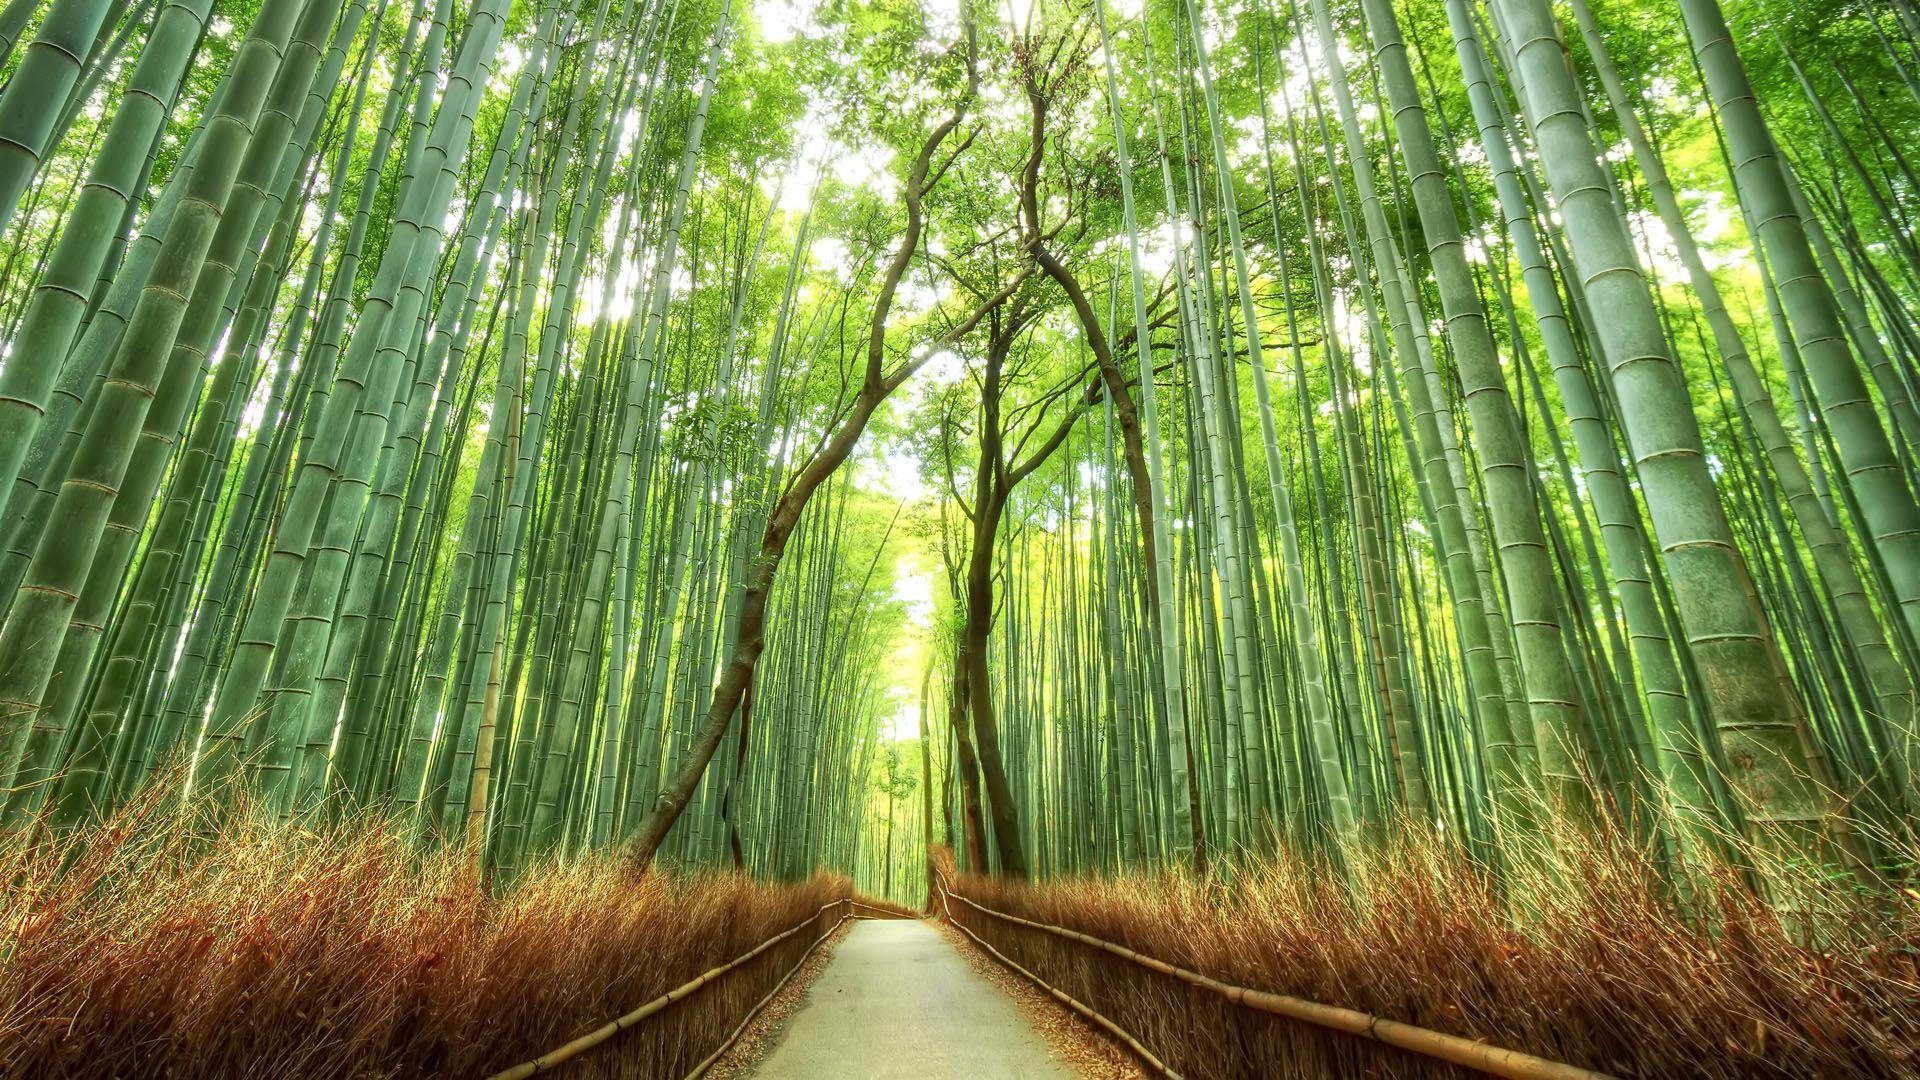 Sagano Bamboo Forest in Arashiyama Japan. Let's go. Japanese